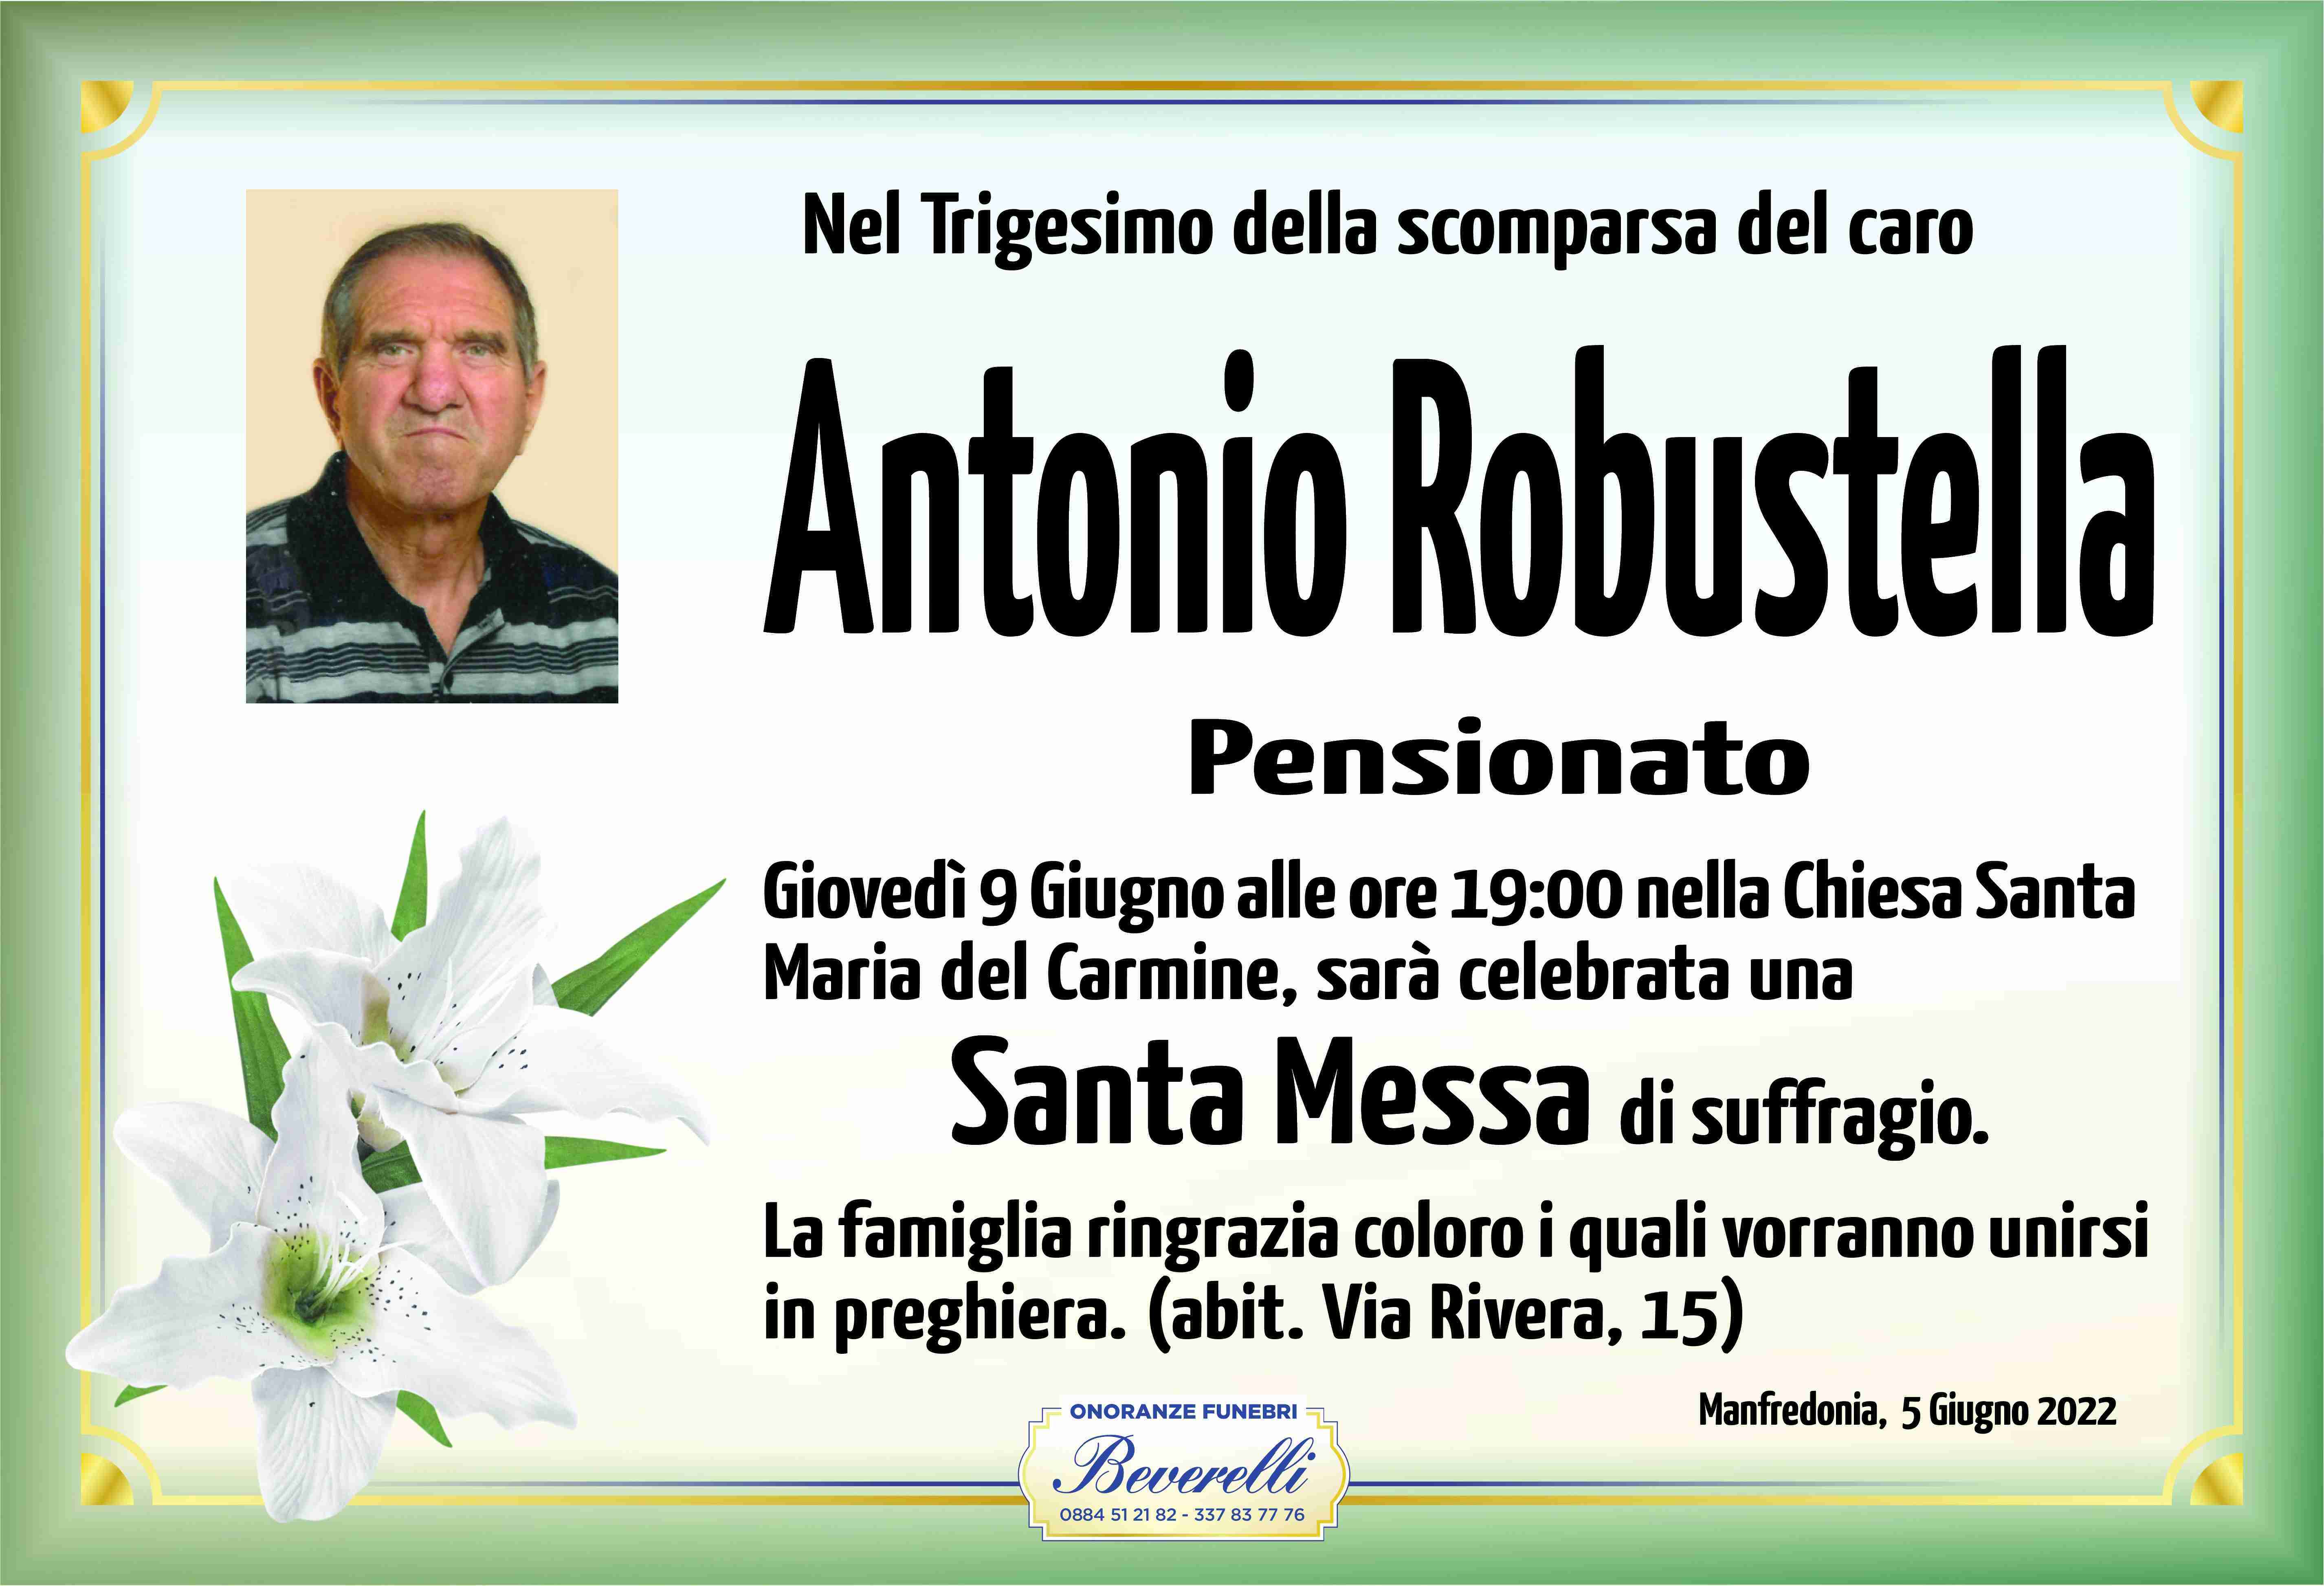 Antonio Robustella